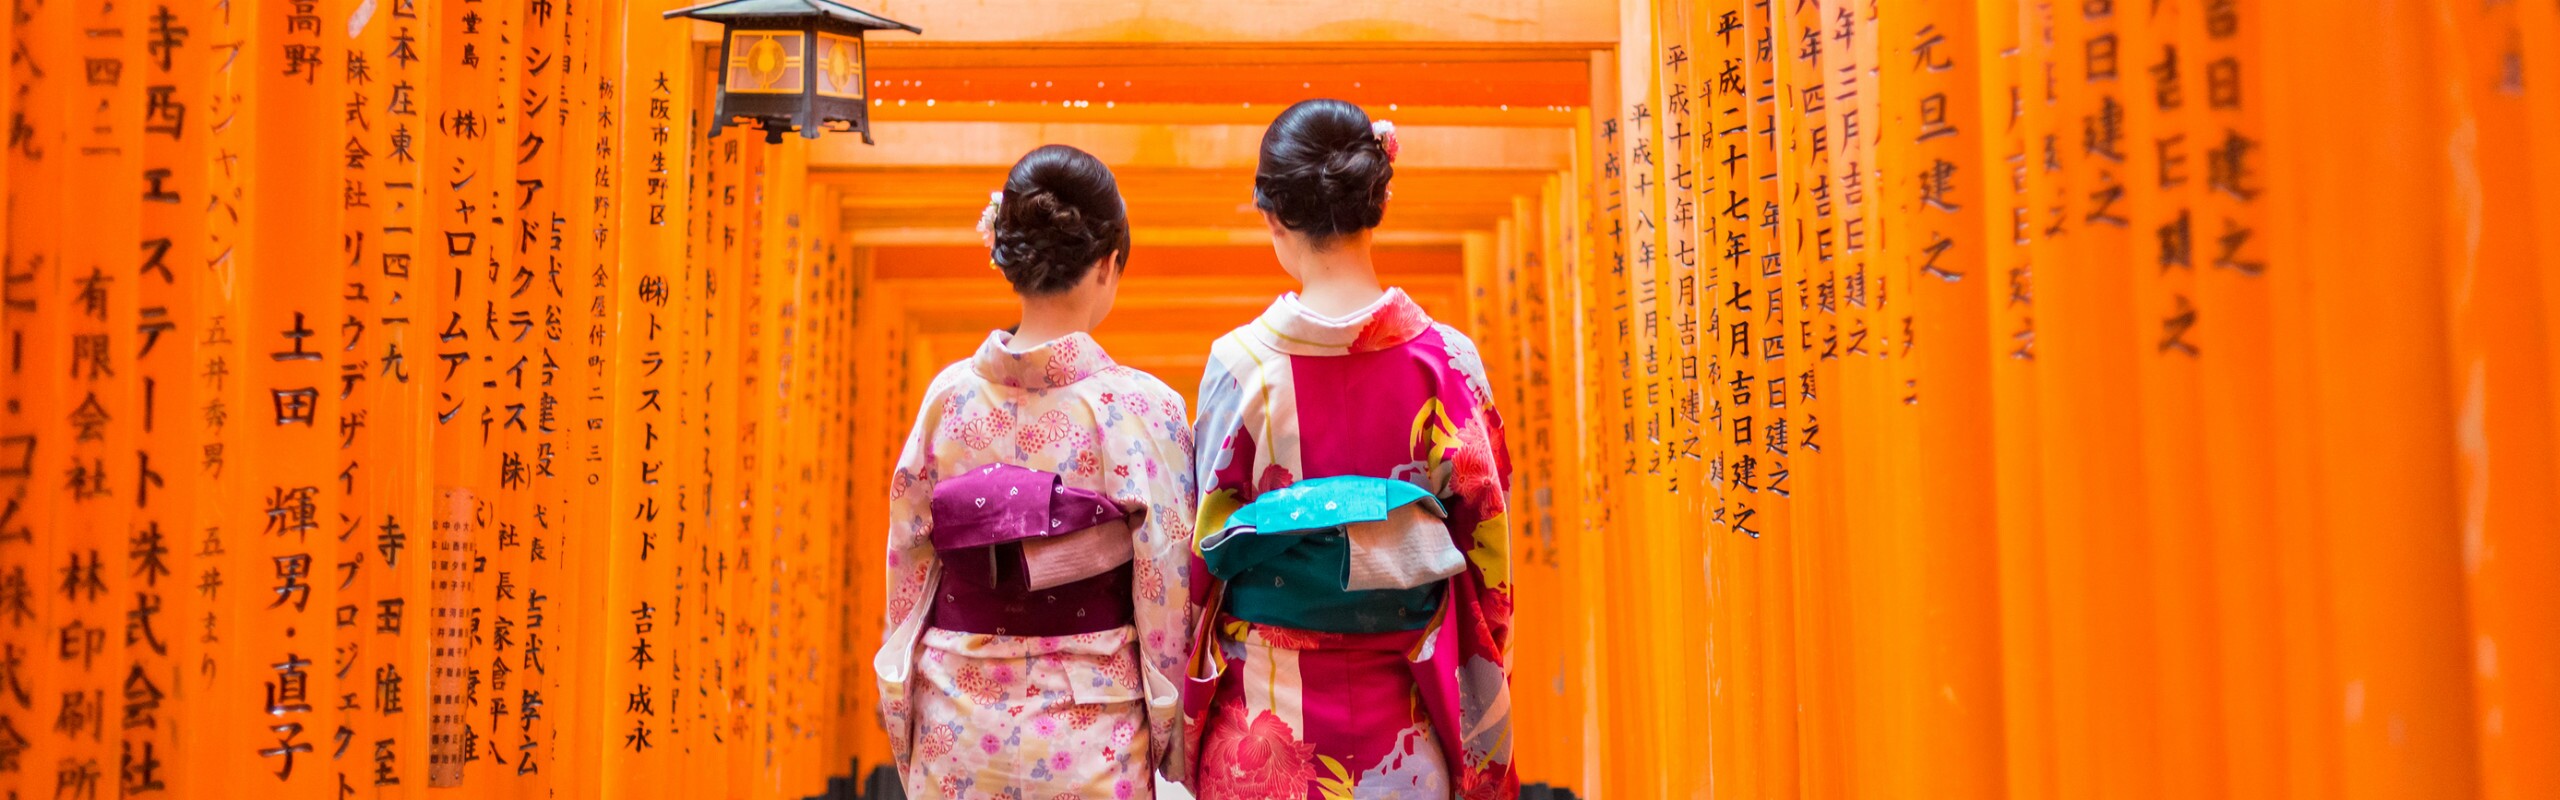 Geisha in Japan - How to Meet a Real Geisha 